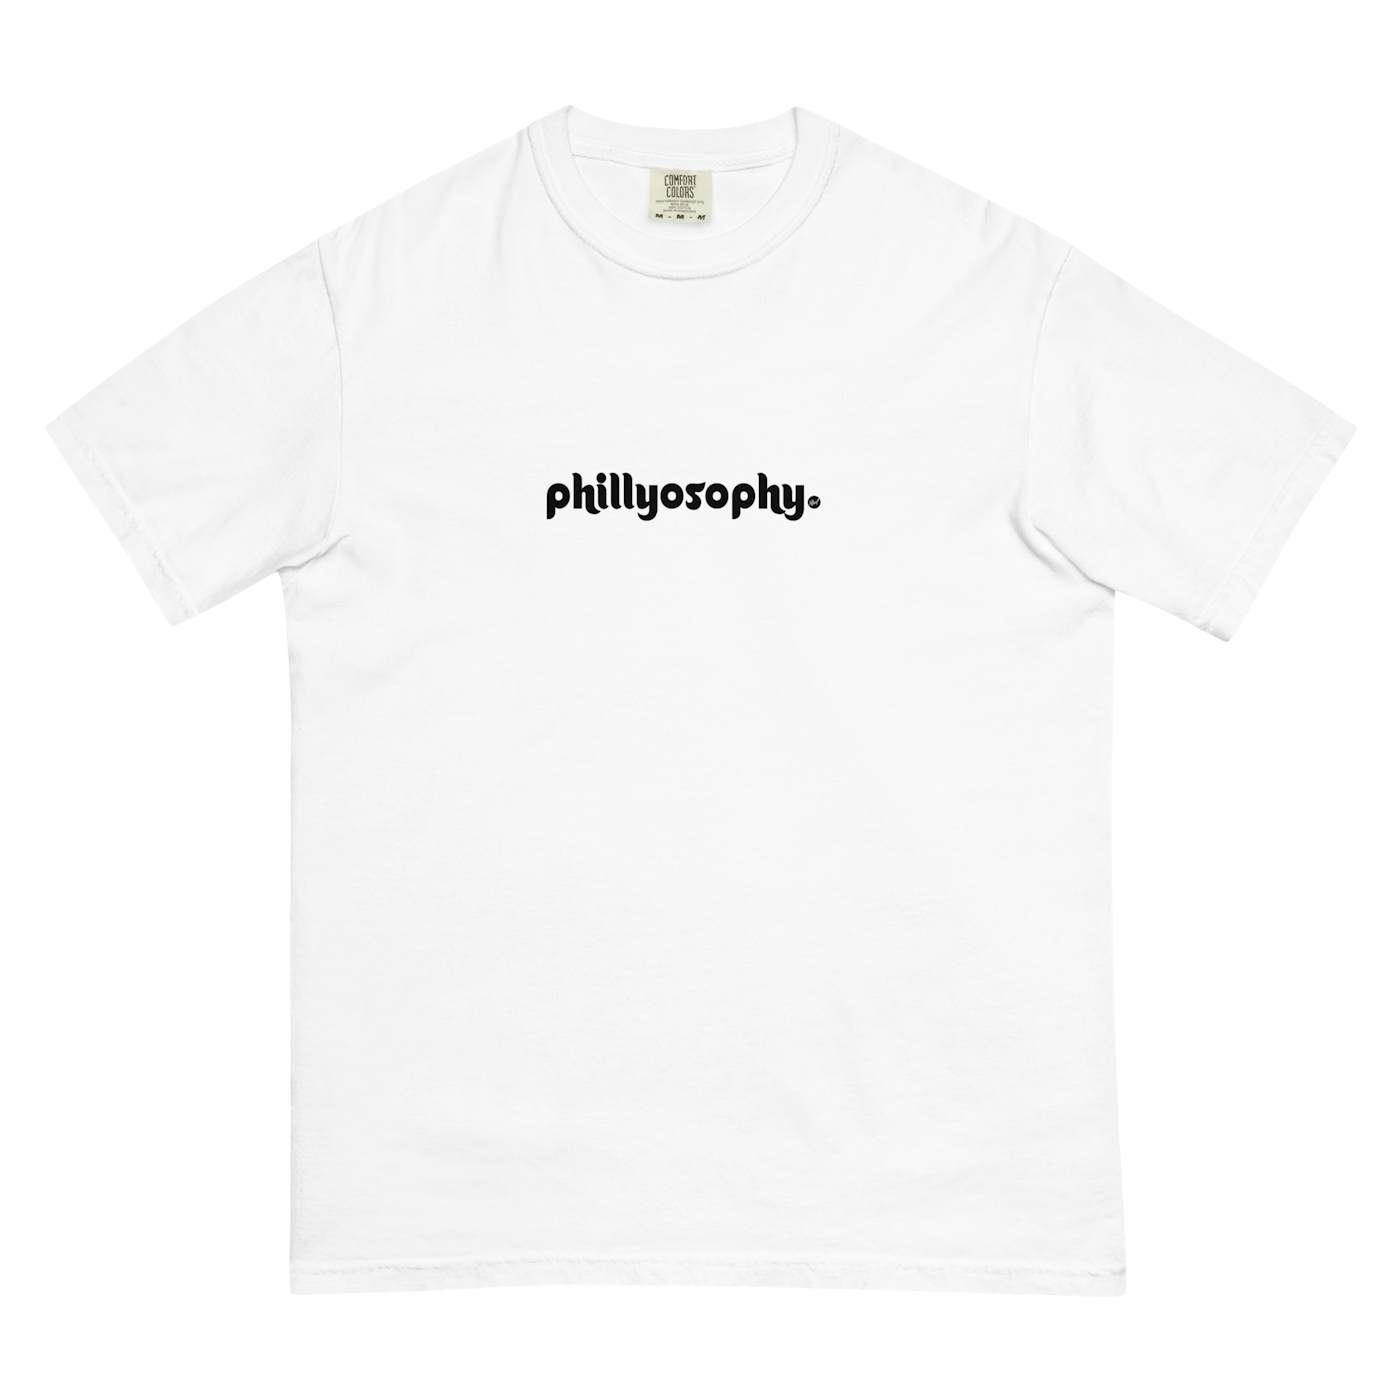 Coley Phillyosophy T-Shirt